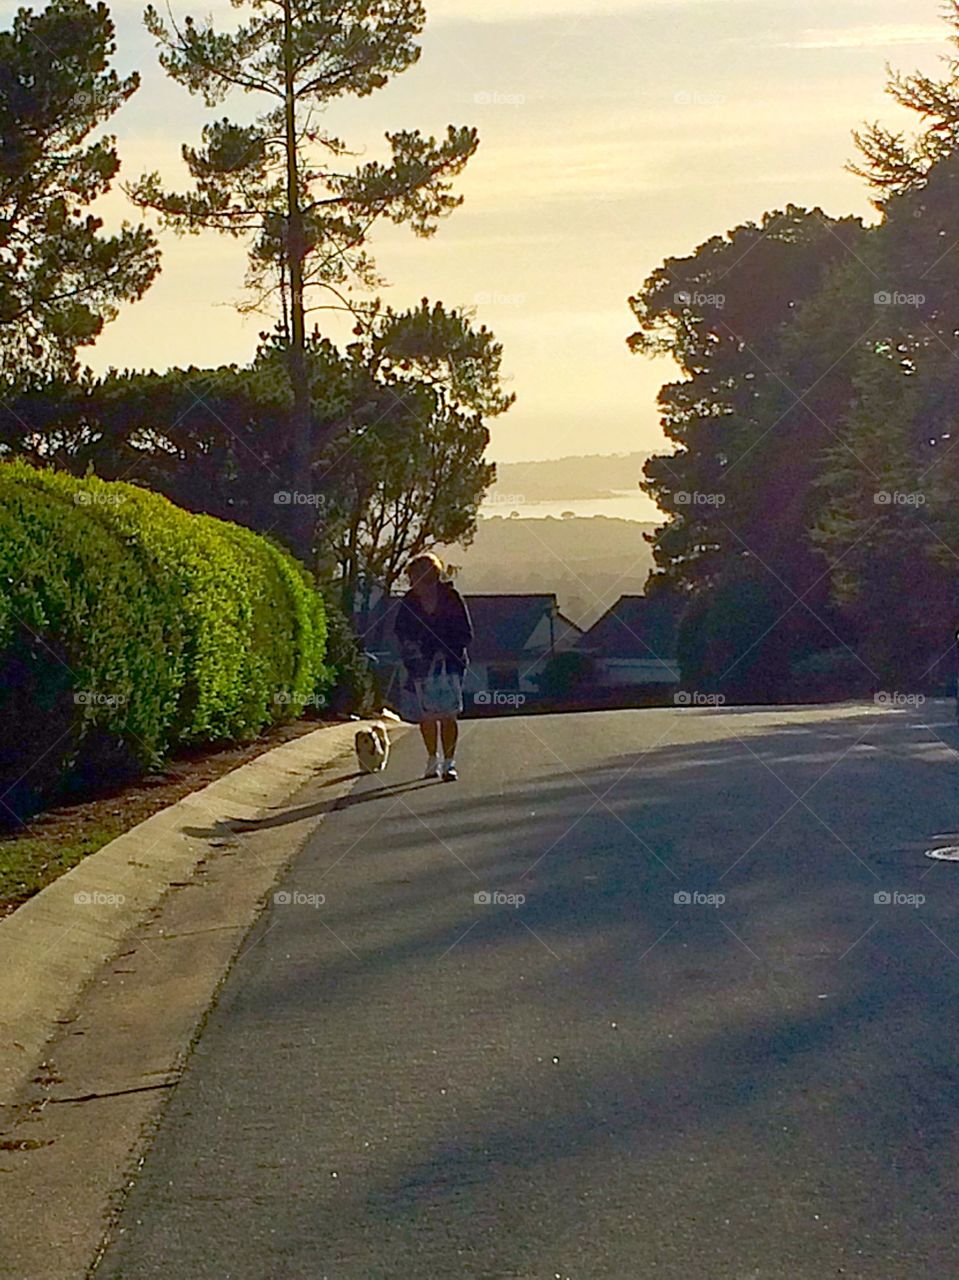 Perfect Walk. Ocean behind, home ahead, walk the dog home